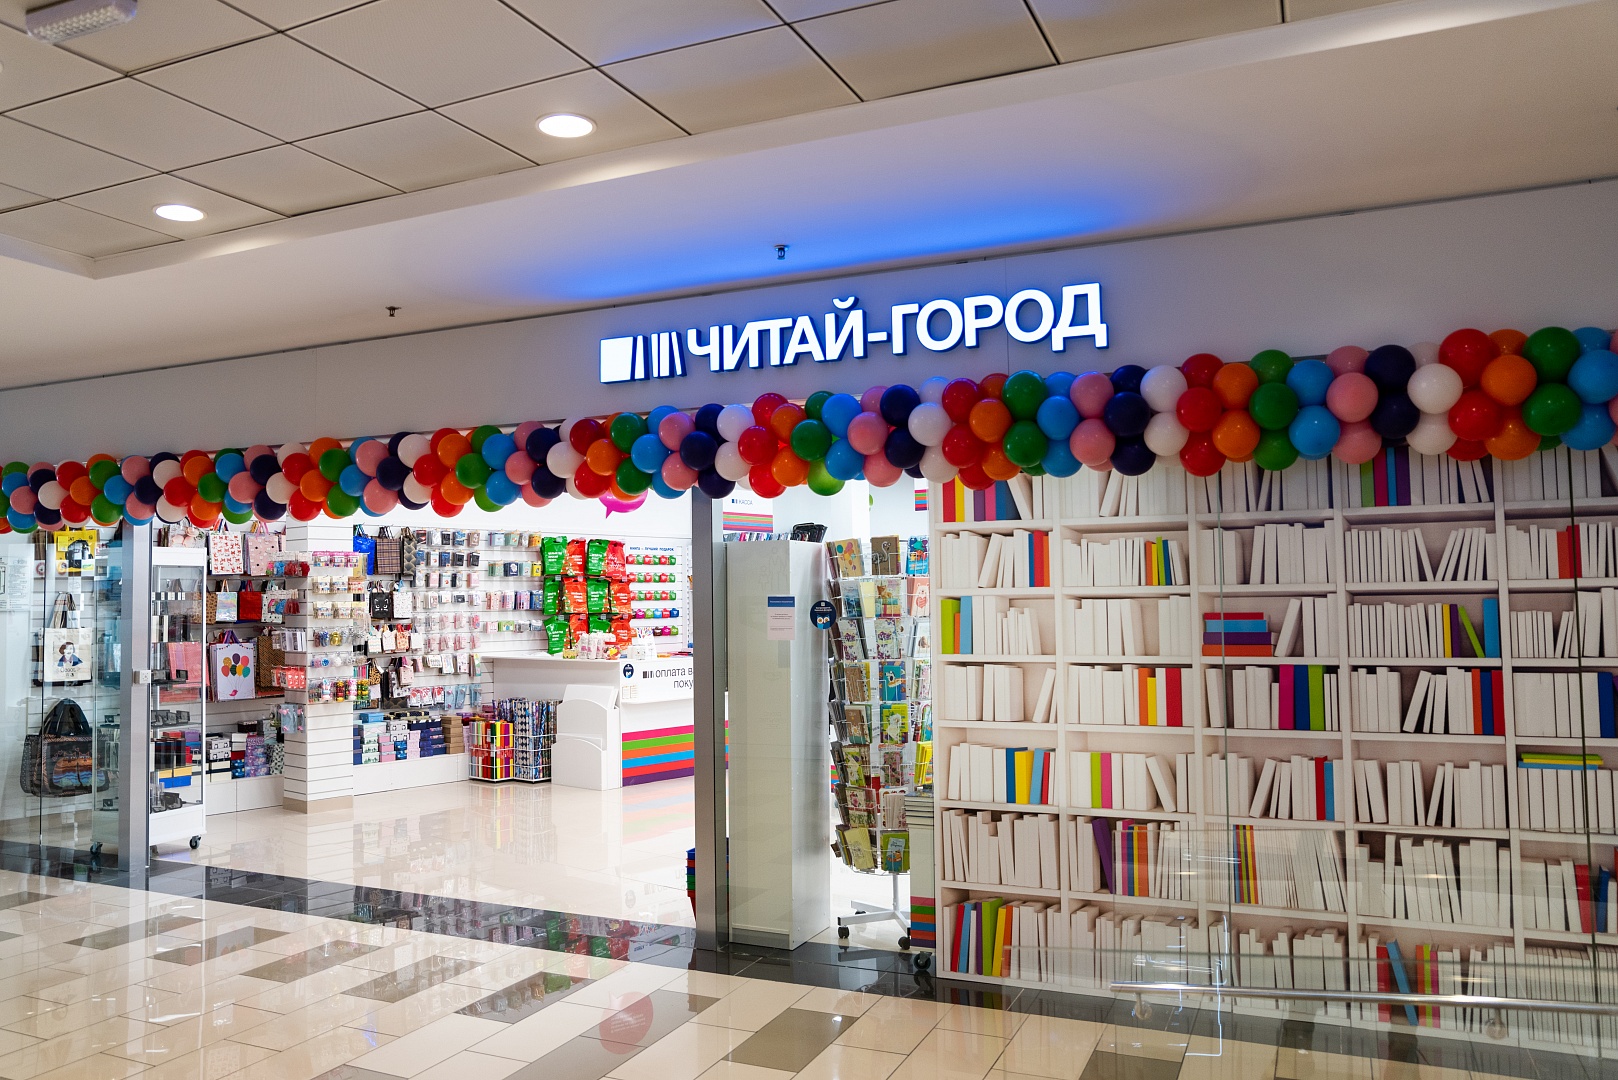 Chitai Gorod Ru Интернет Магазин